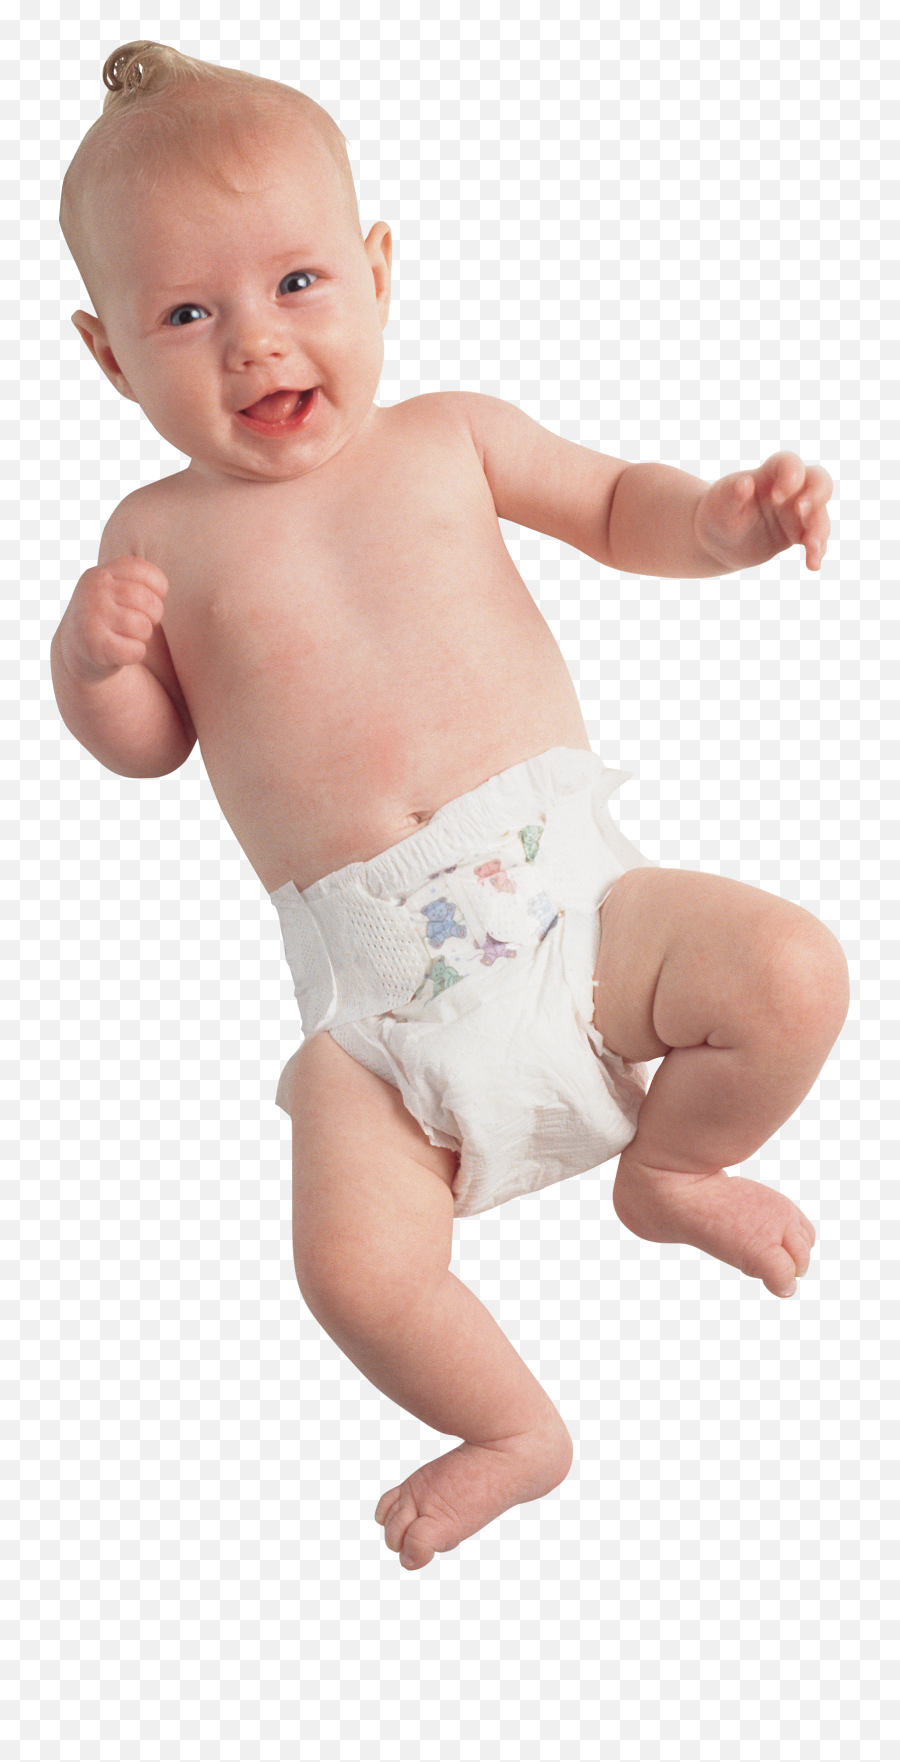 Baby Png Image - Purepng Free Transparent Cc0 Png Image Transparent Human Baby Png,Infant Png